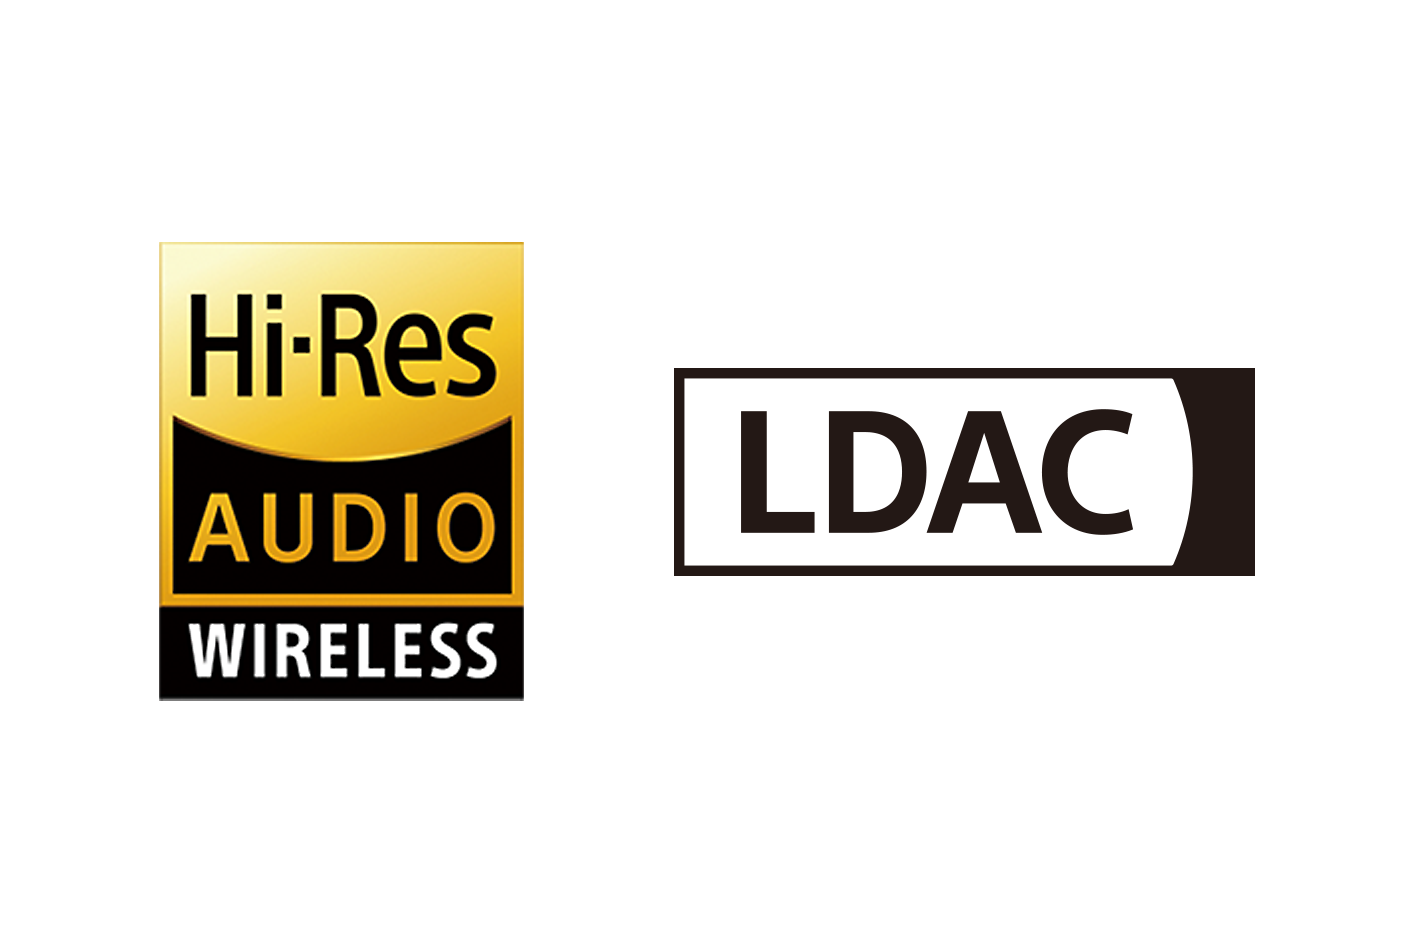 Hi-Res Audio Wireless & LDAC logo's.